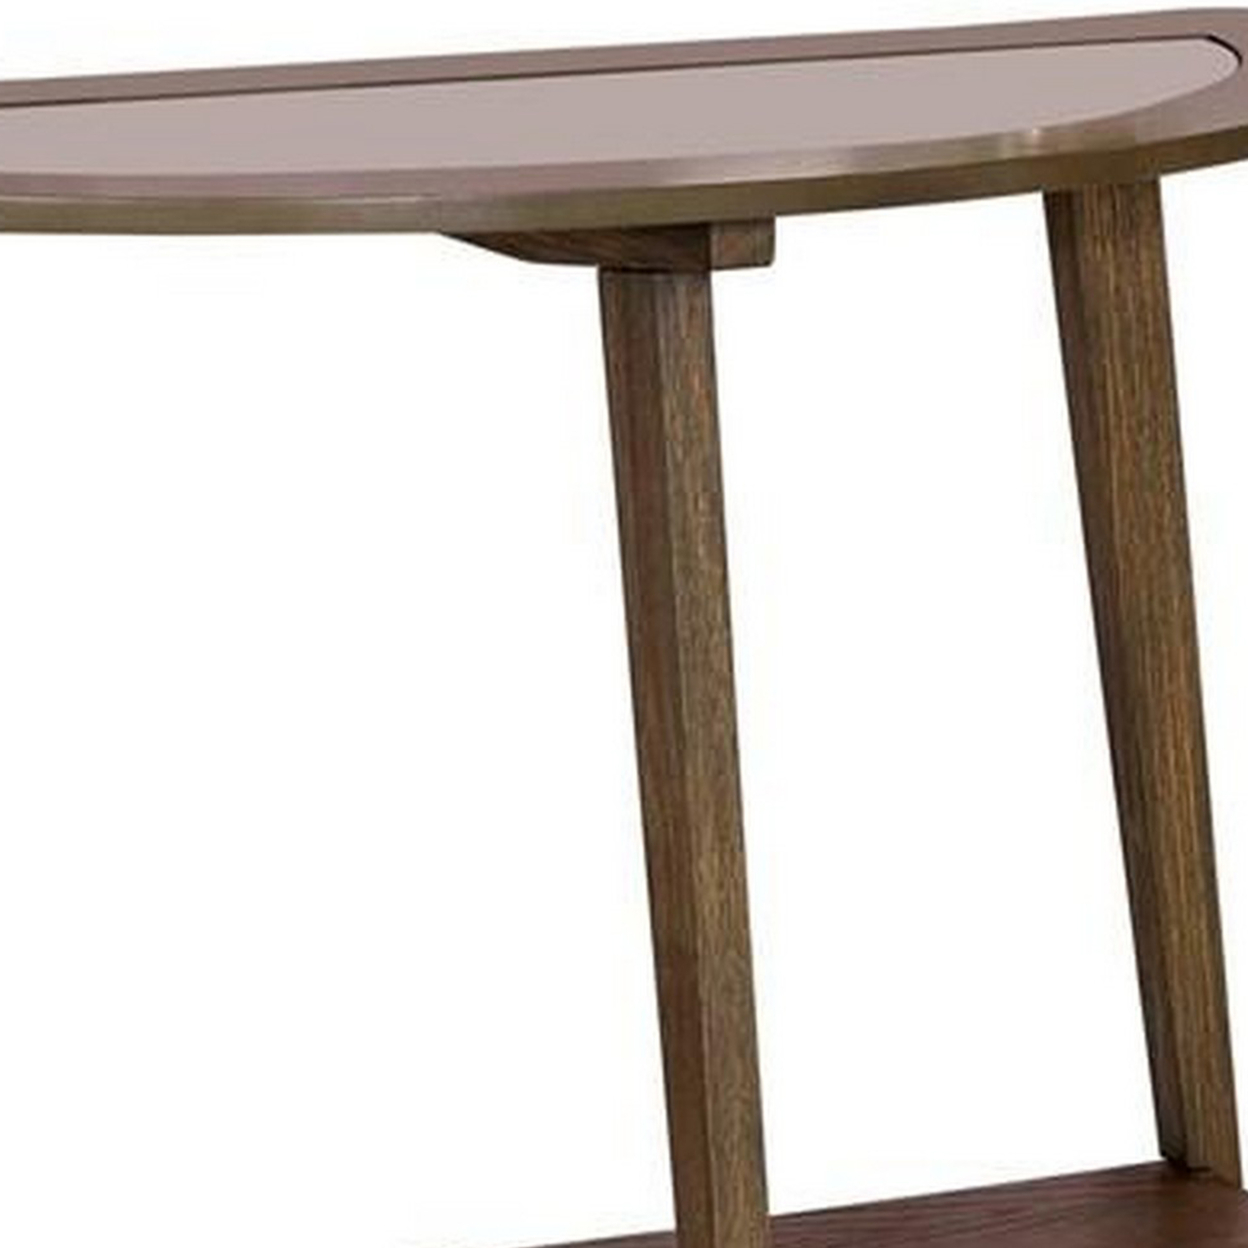 30 Inch Semicircular Wooden Sofa Table With Glass Top, Brown- Saltoro Sherpi